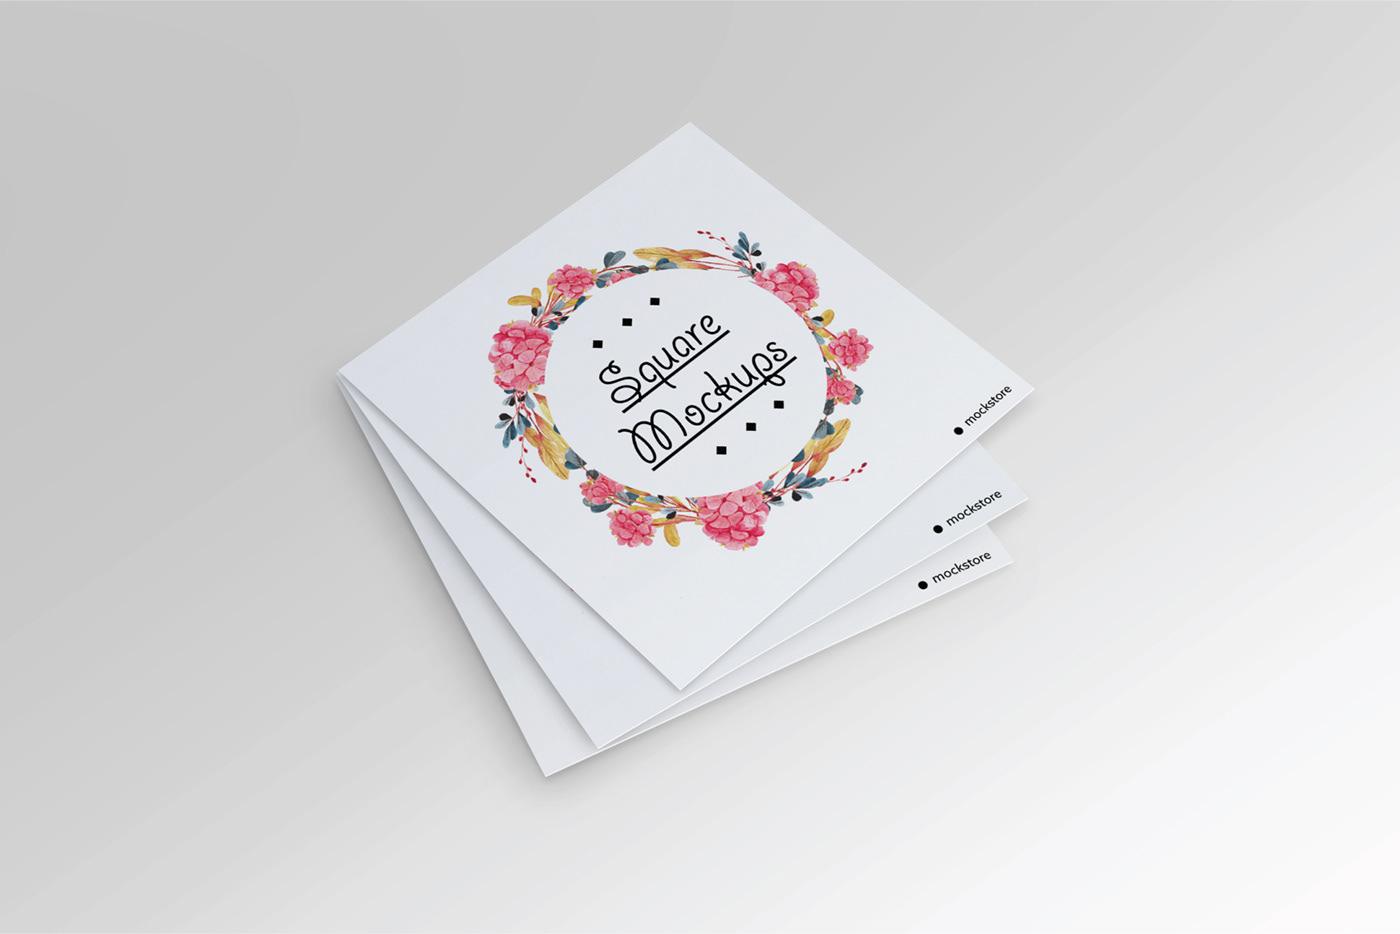 free download free mockup  freebie flyer brochure square design print template cards